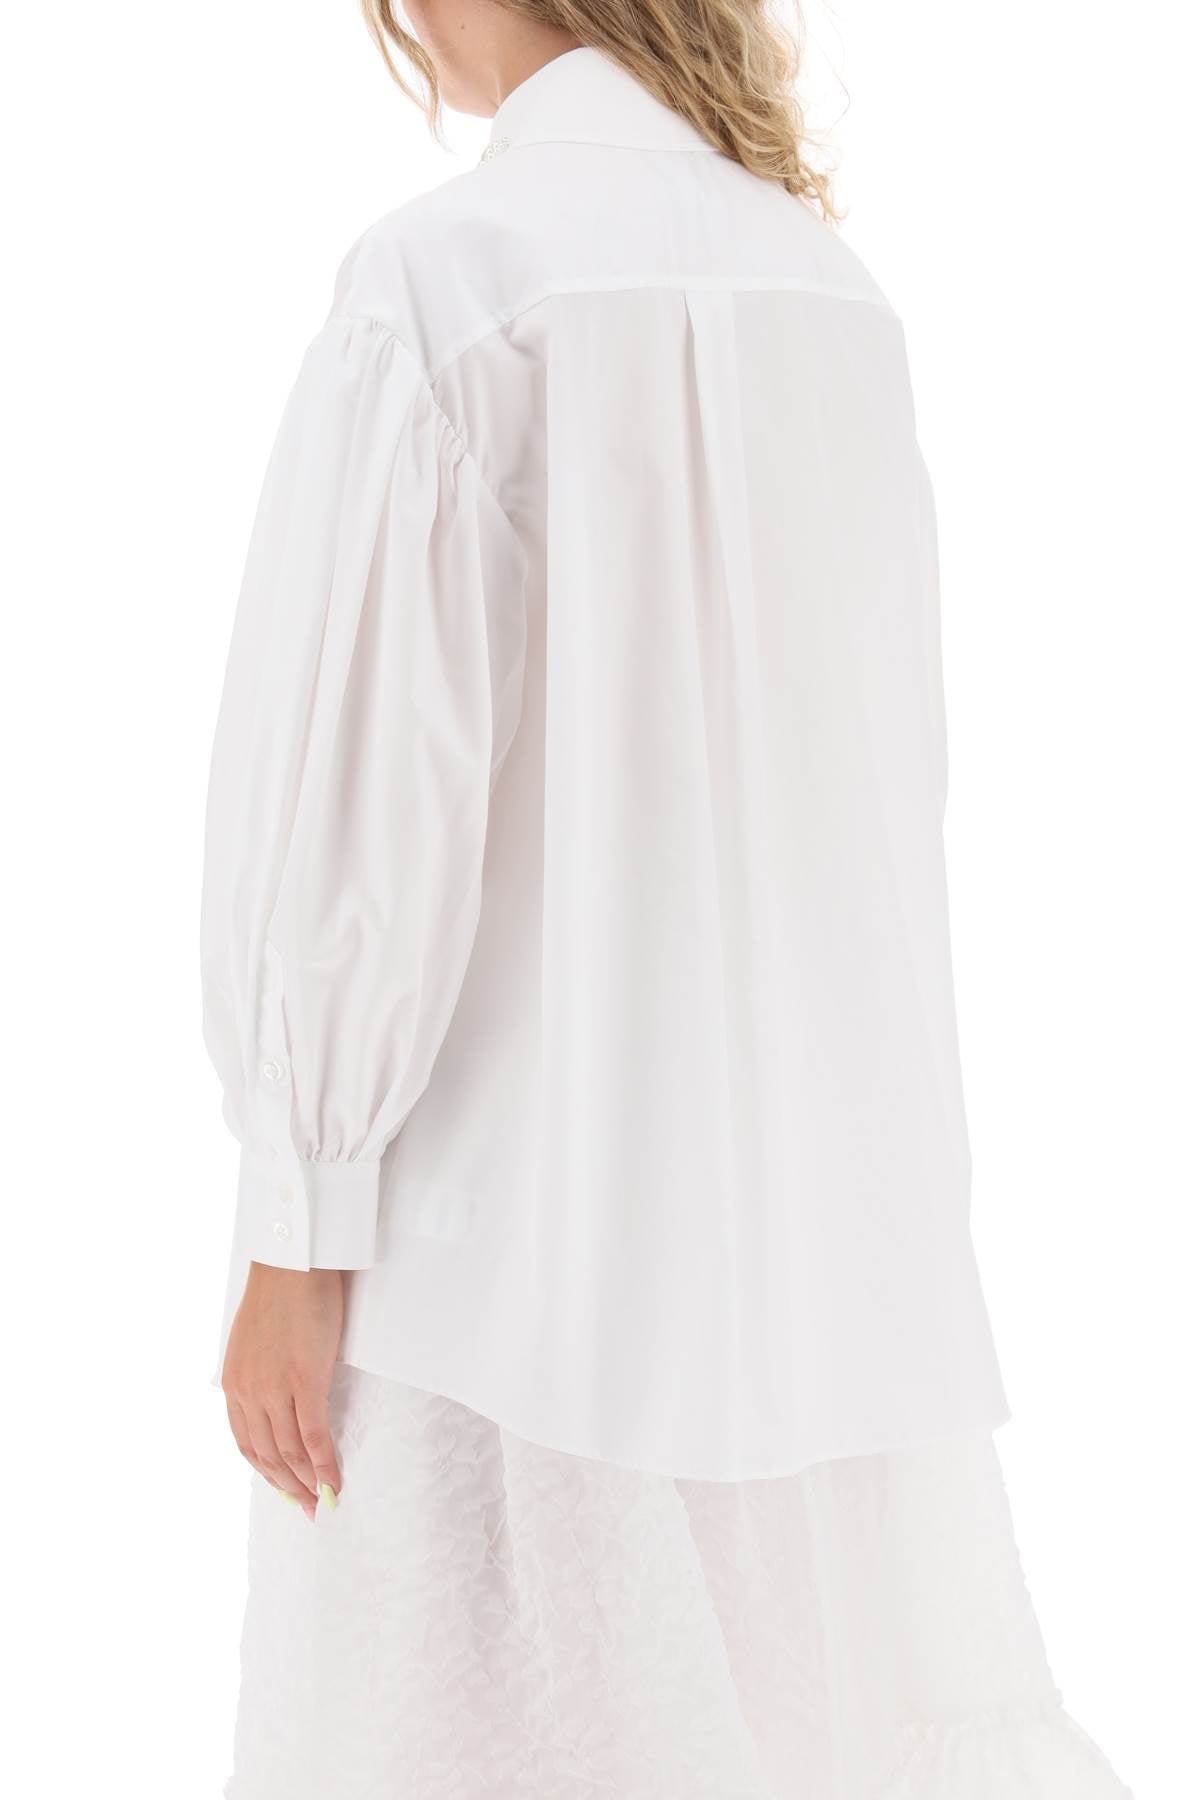 SIMONE ROCHA Elegant Puff Sleeve Shirt with Embellishments in White